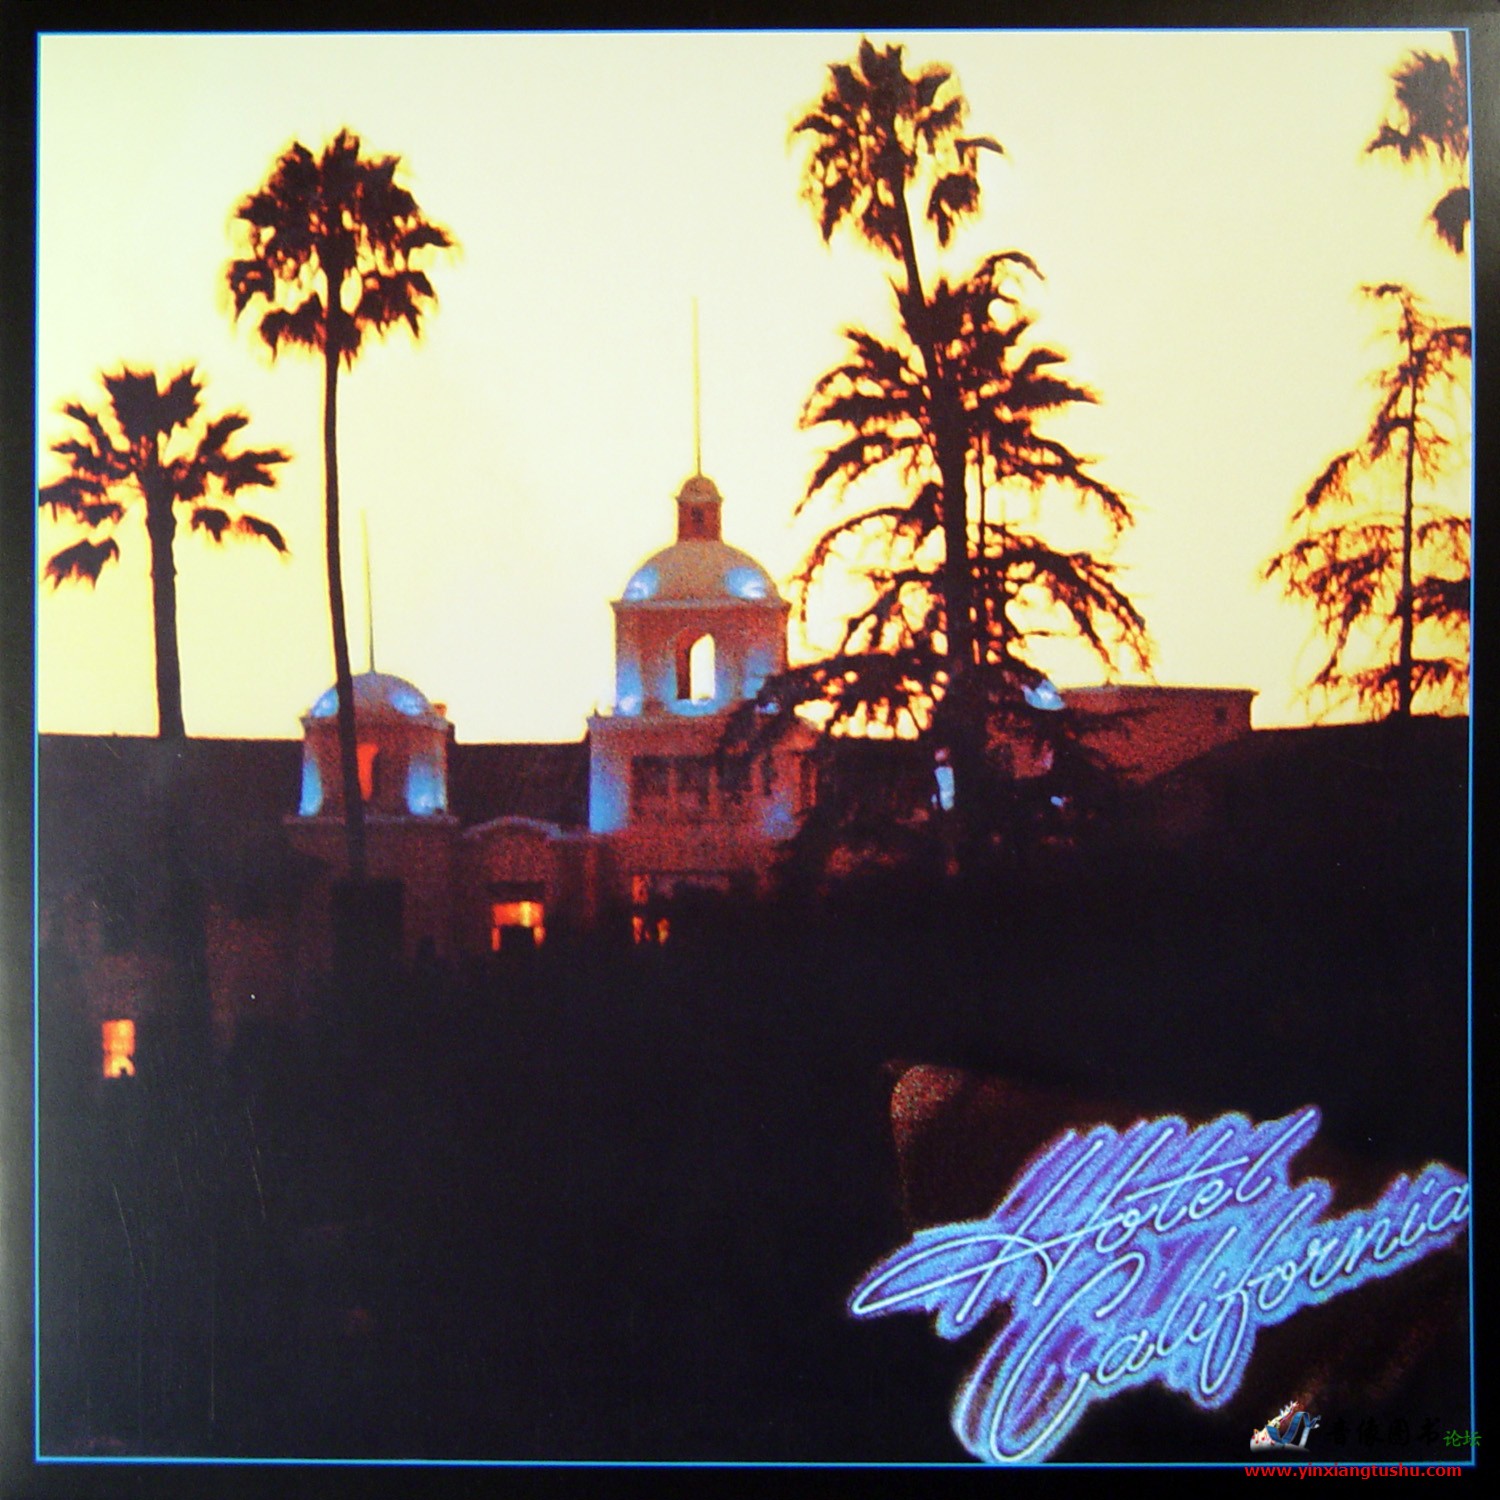 Eagles - Hotel California - front.jpg